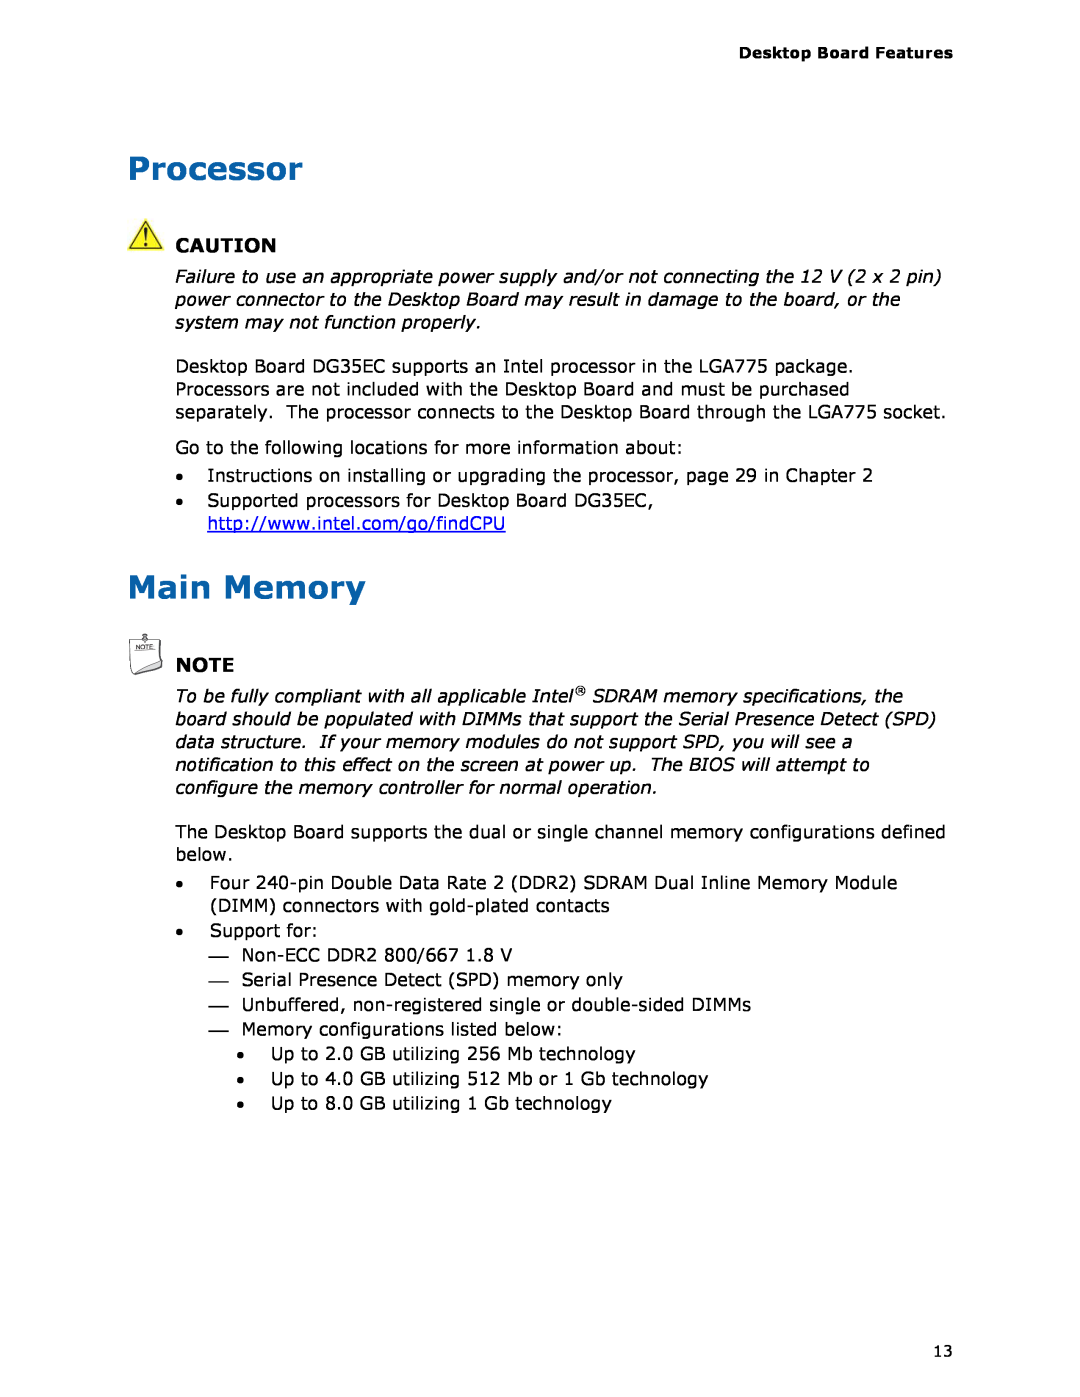 Intel DG35EC, Intel Desktop Board manual Processor, Main Memory 